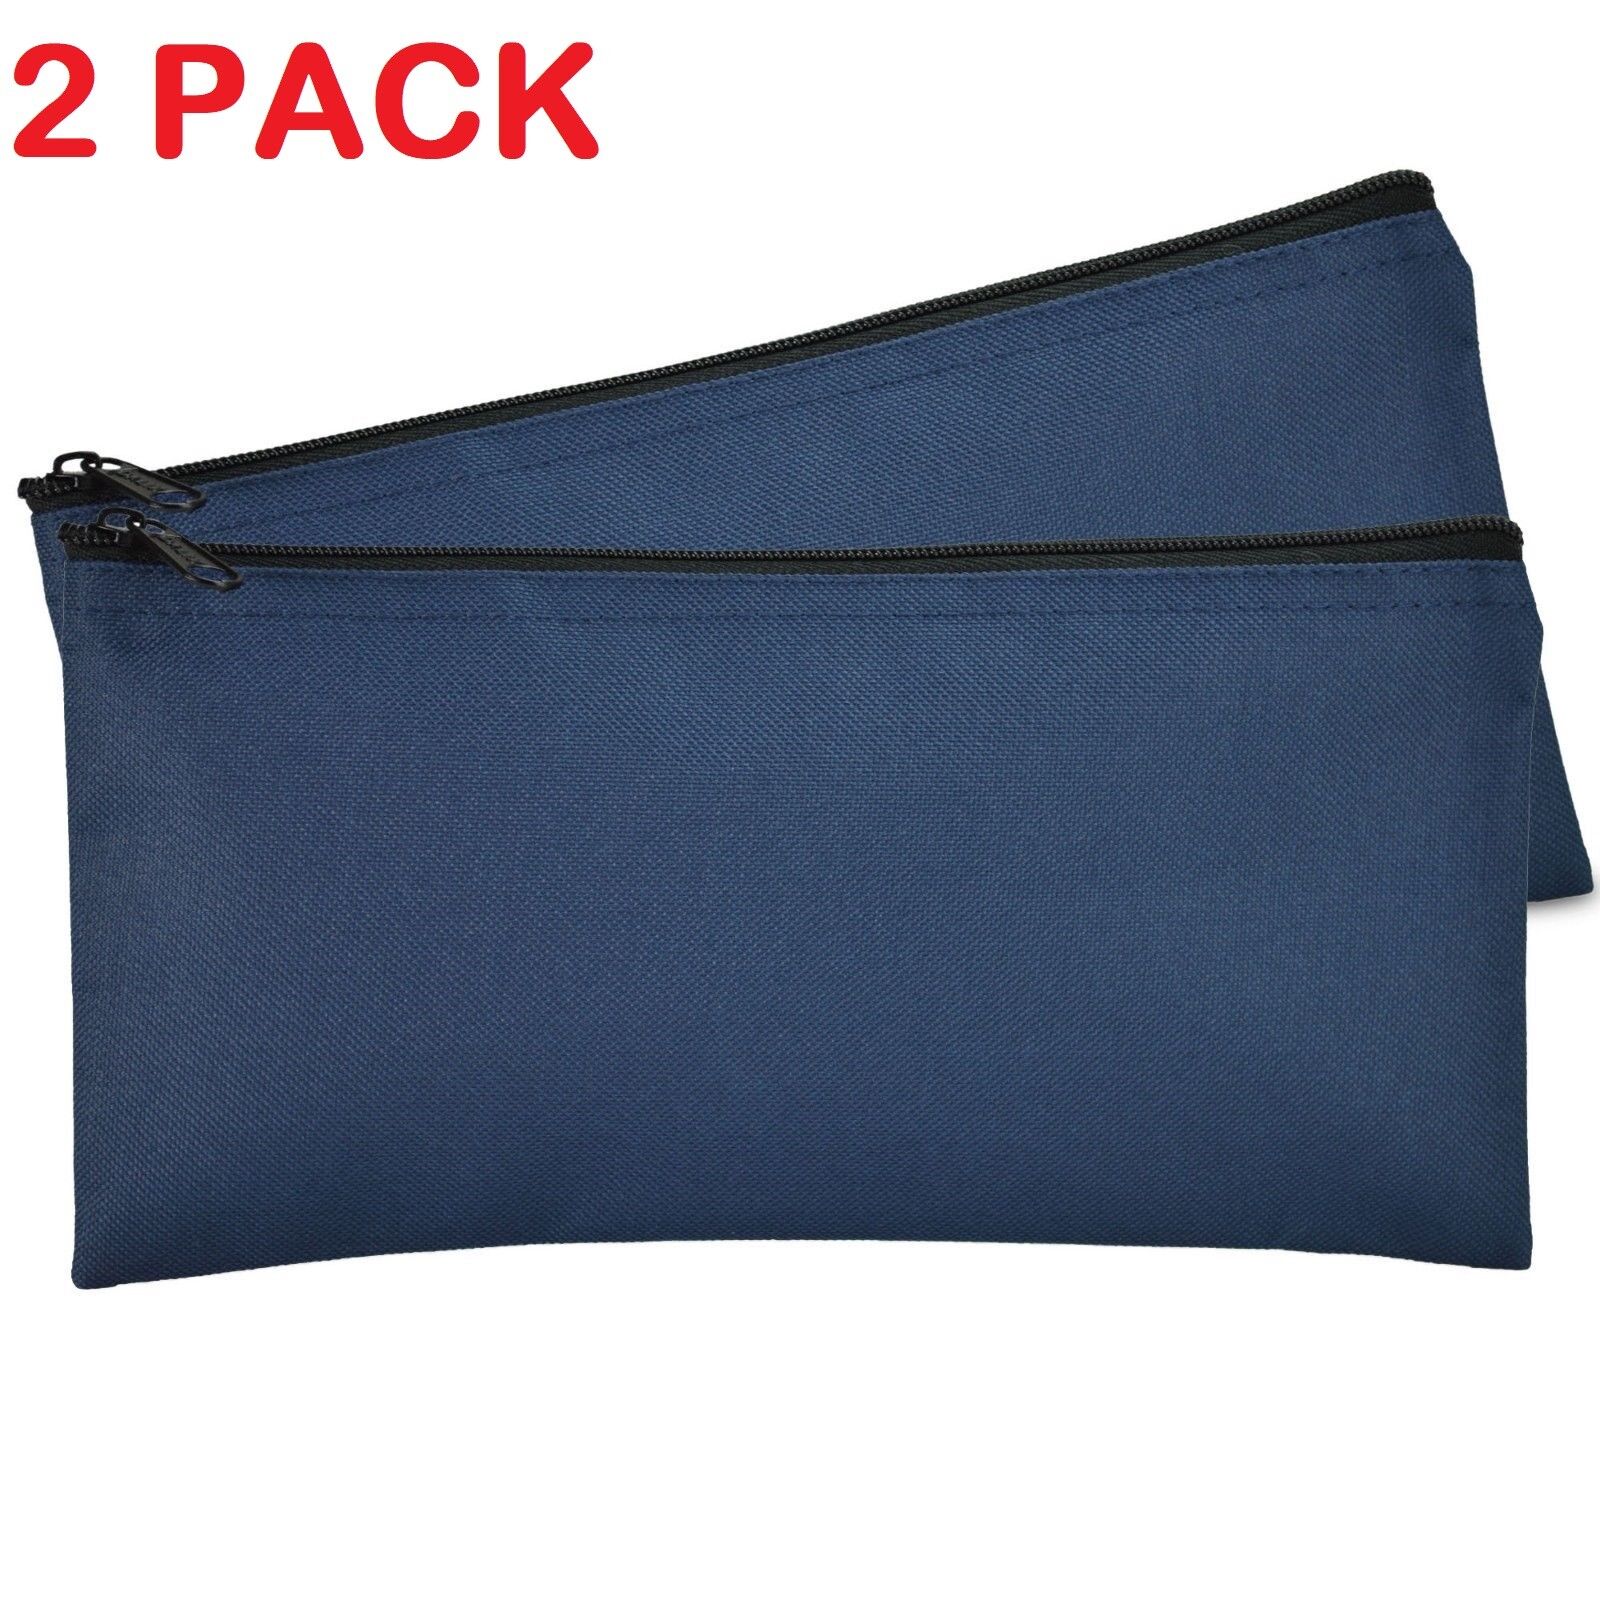 Deposit Bag Bank Pouch Zippered Safe Money Bag Organizer in Navy Blue 2 QTY Pack